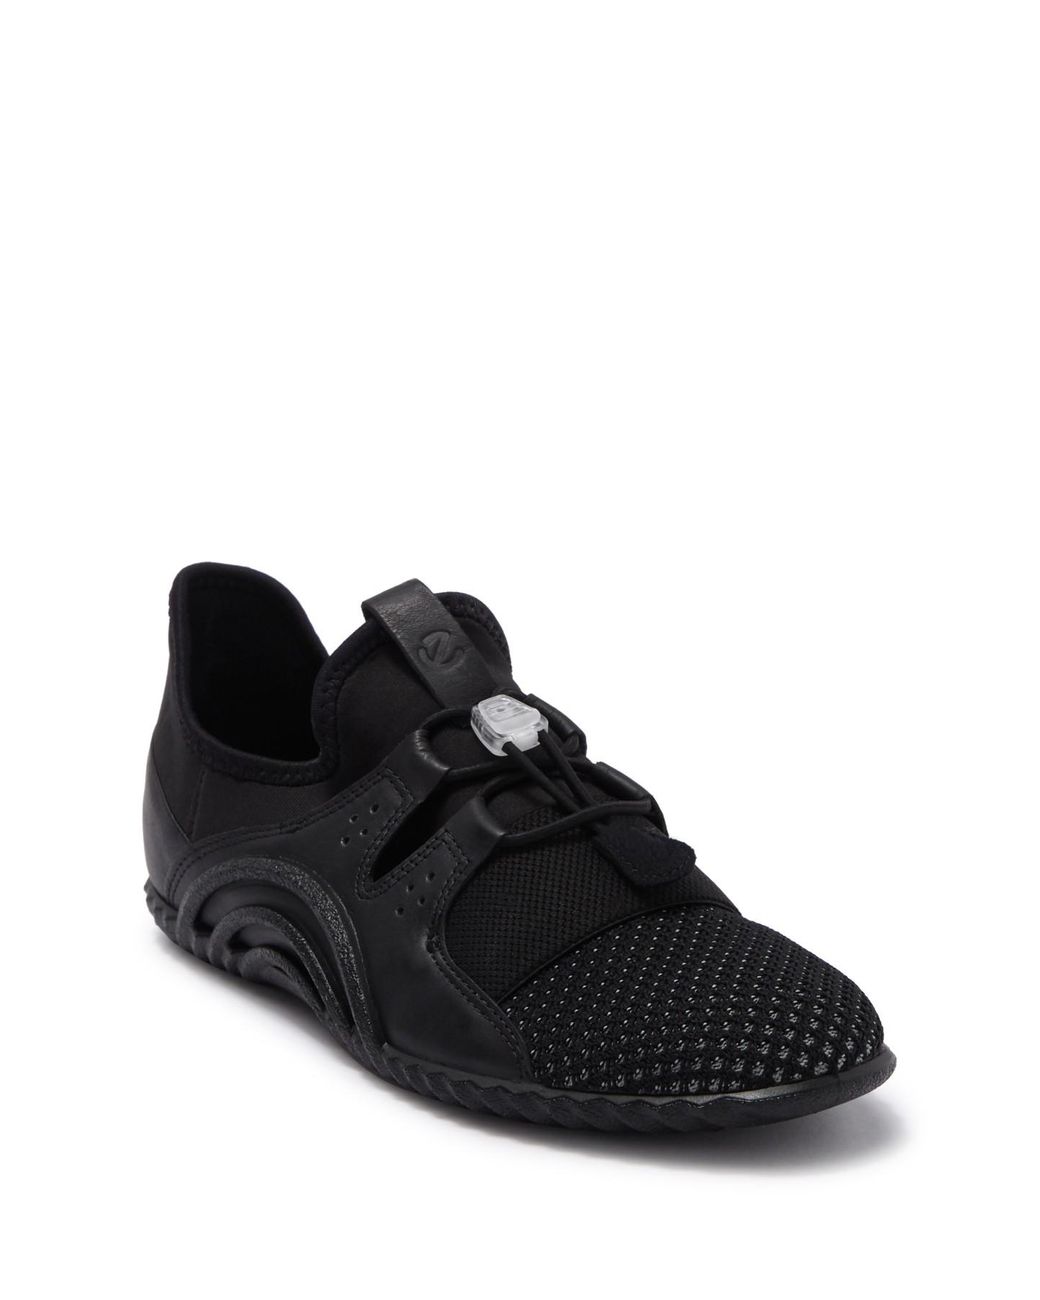 Ecco Leather Vibration 1.0 Toggle Sneaker in Black Leather (Black ...